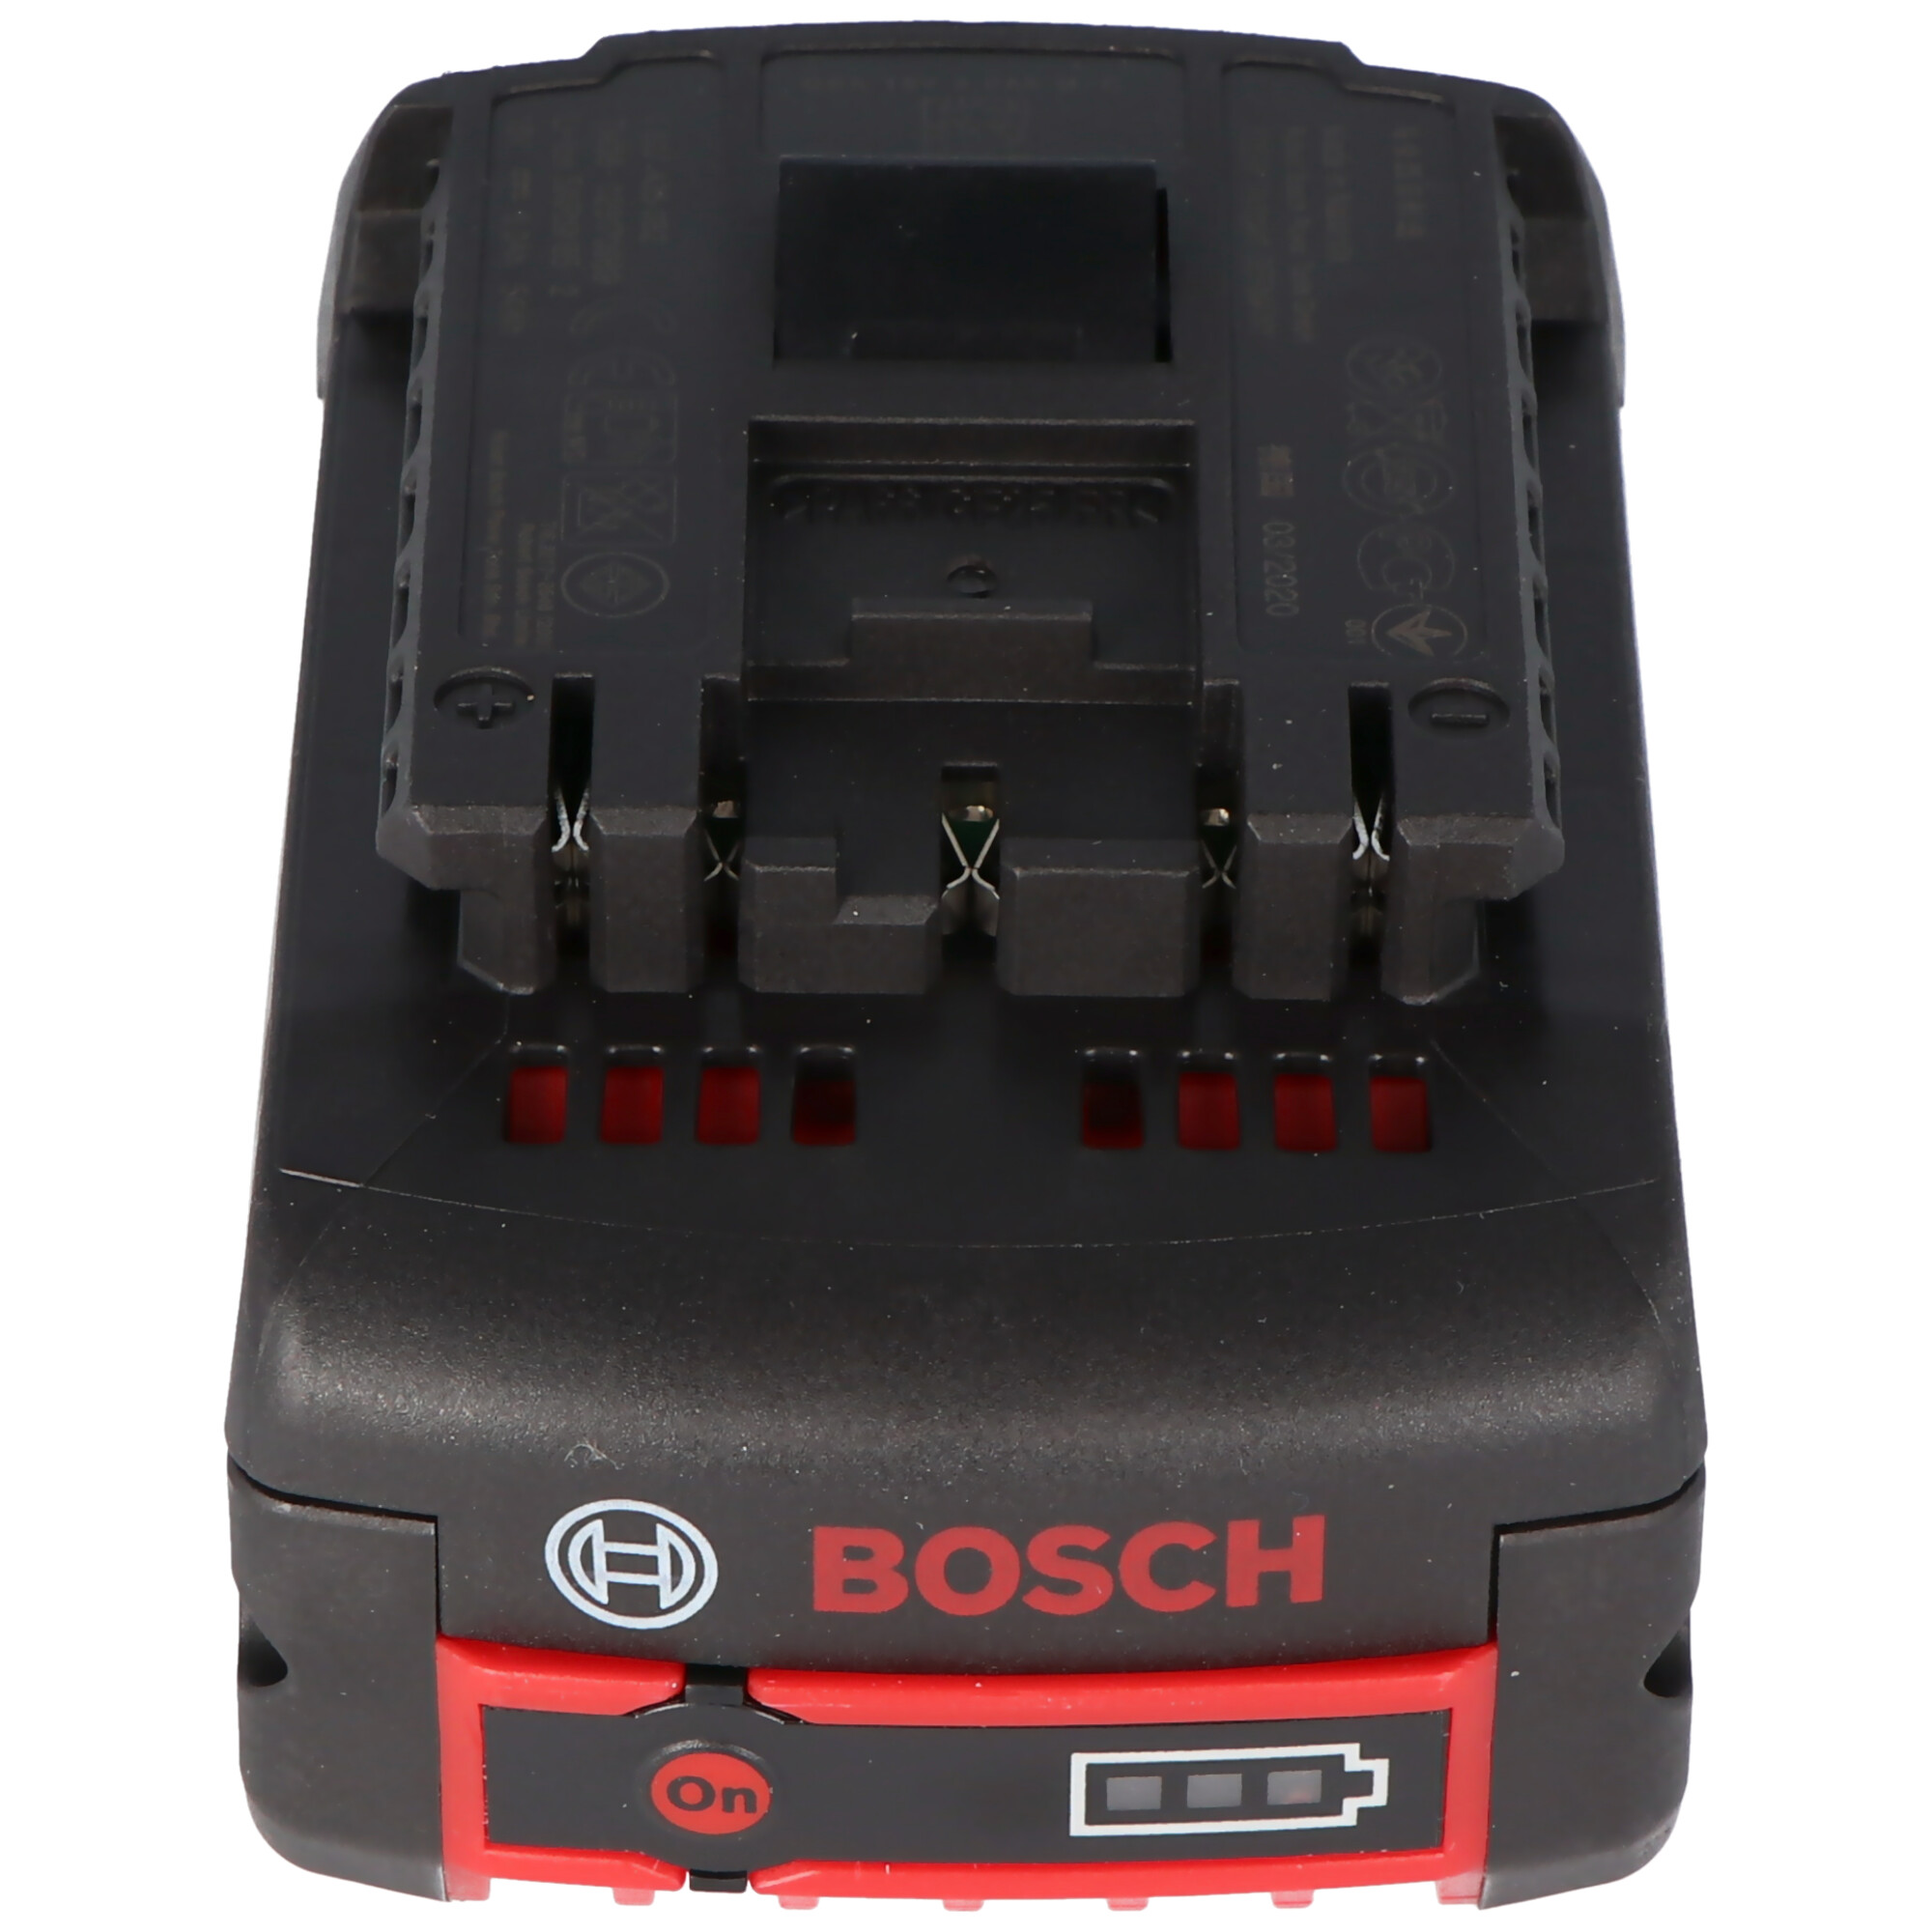 4000mAh Original Bosch GSR 18 V-LI Akku, passend für Würth 0700 916 532, 0700916532, BS 18-A, 18V, 4Ah